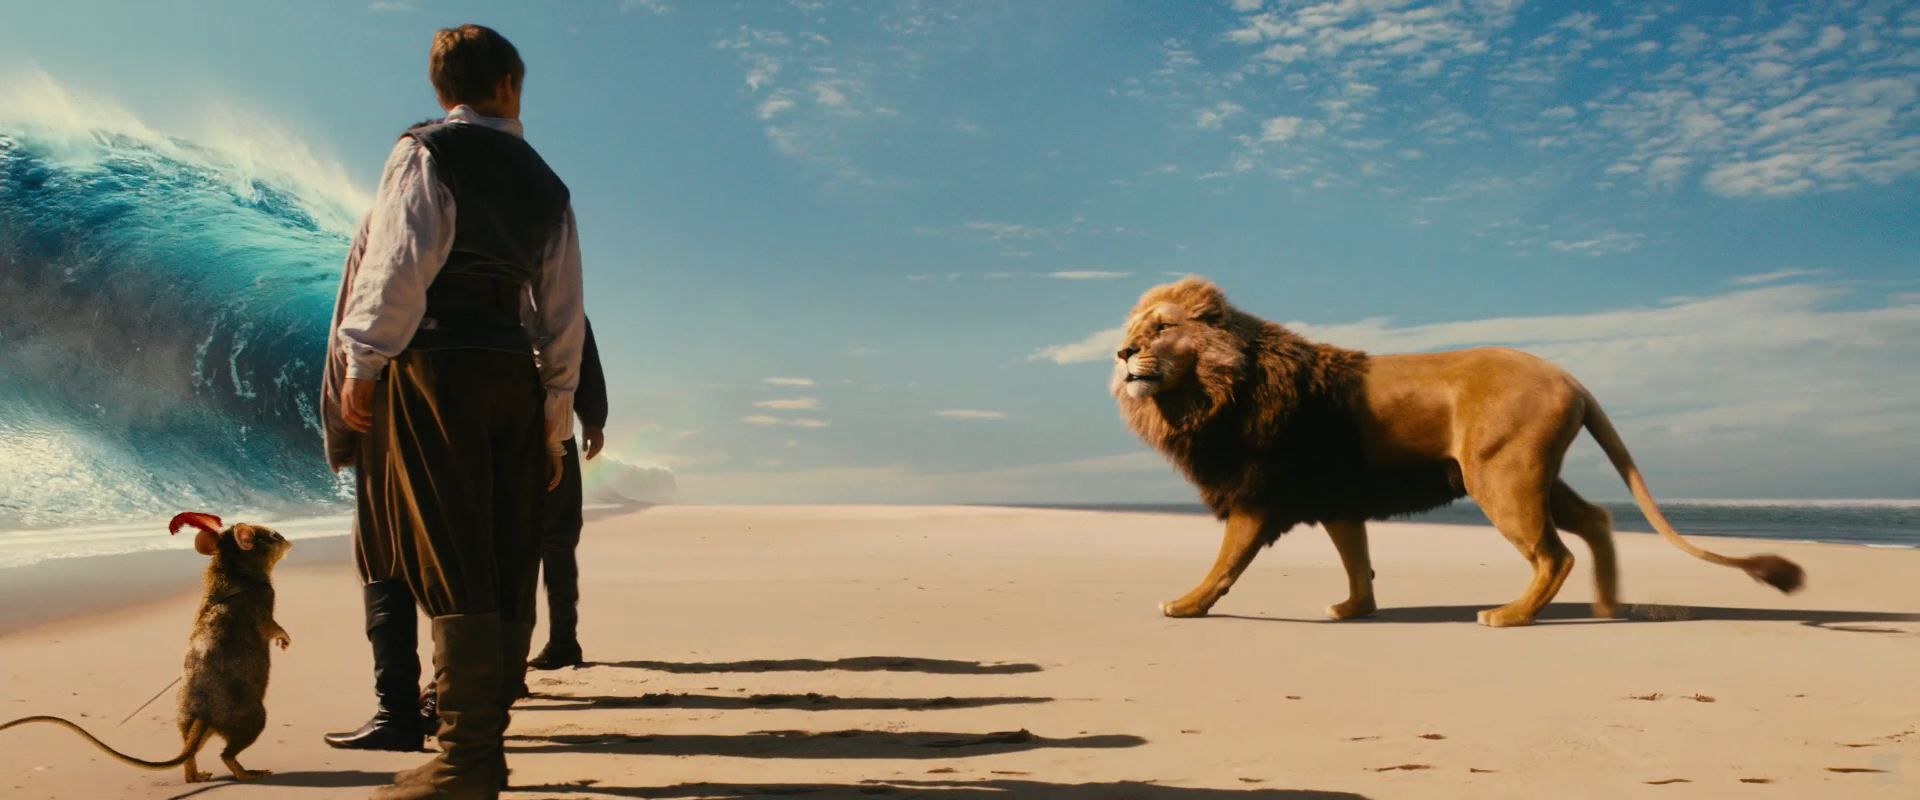 Aslan in Narnia Dawn Treader | Movie Wallpaper Pics